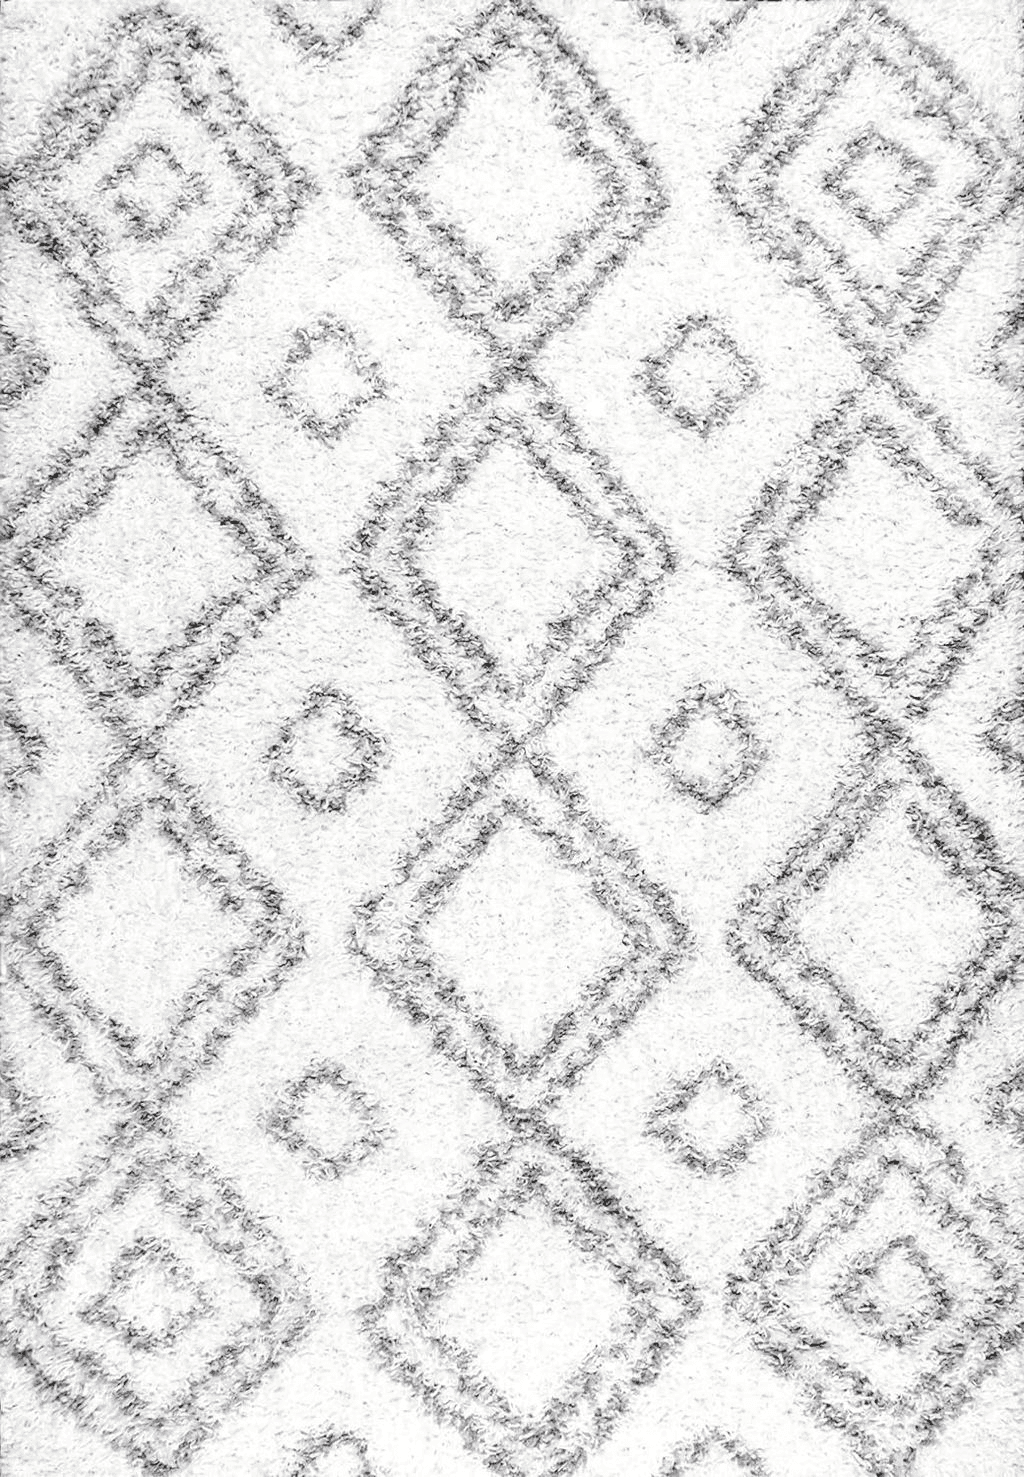 Moroccan Black White nuLOOM Iola Geometric Shag Accent Rug, 2x3, White